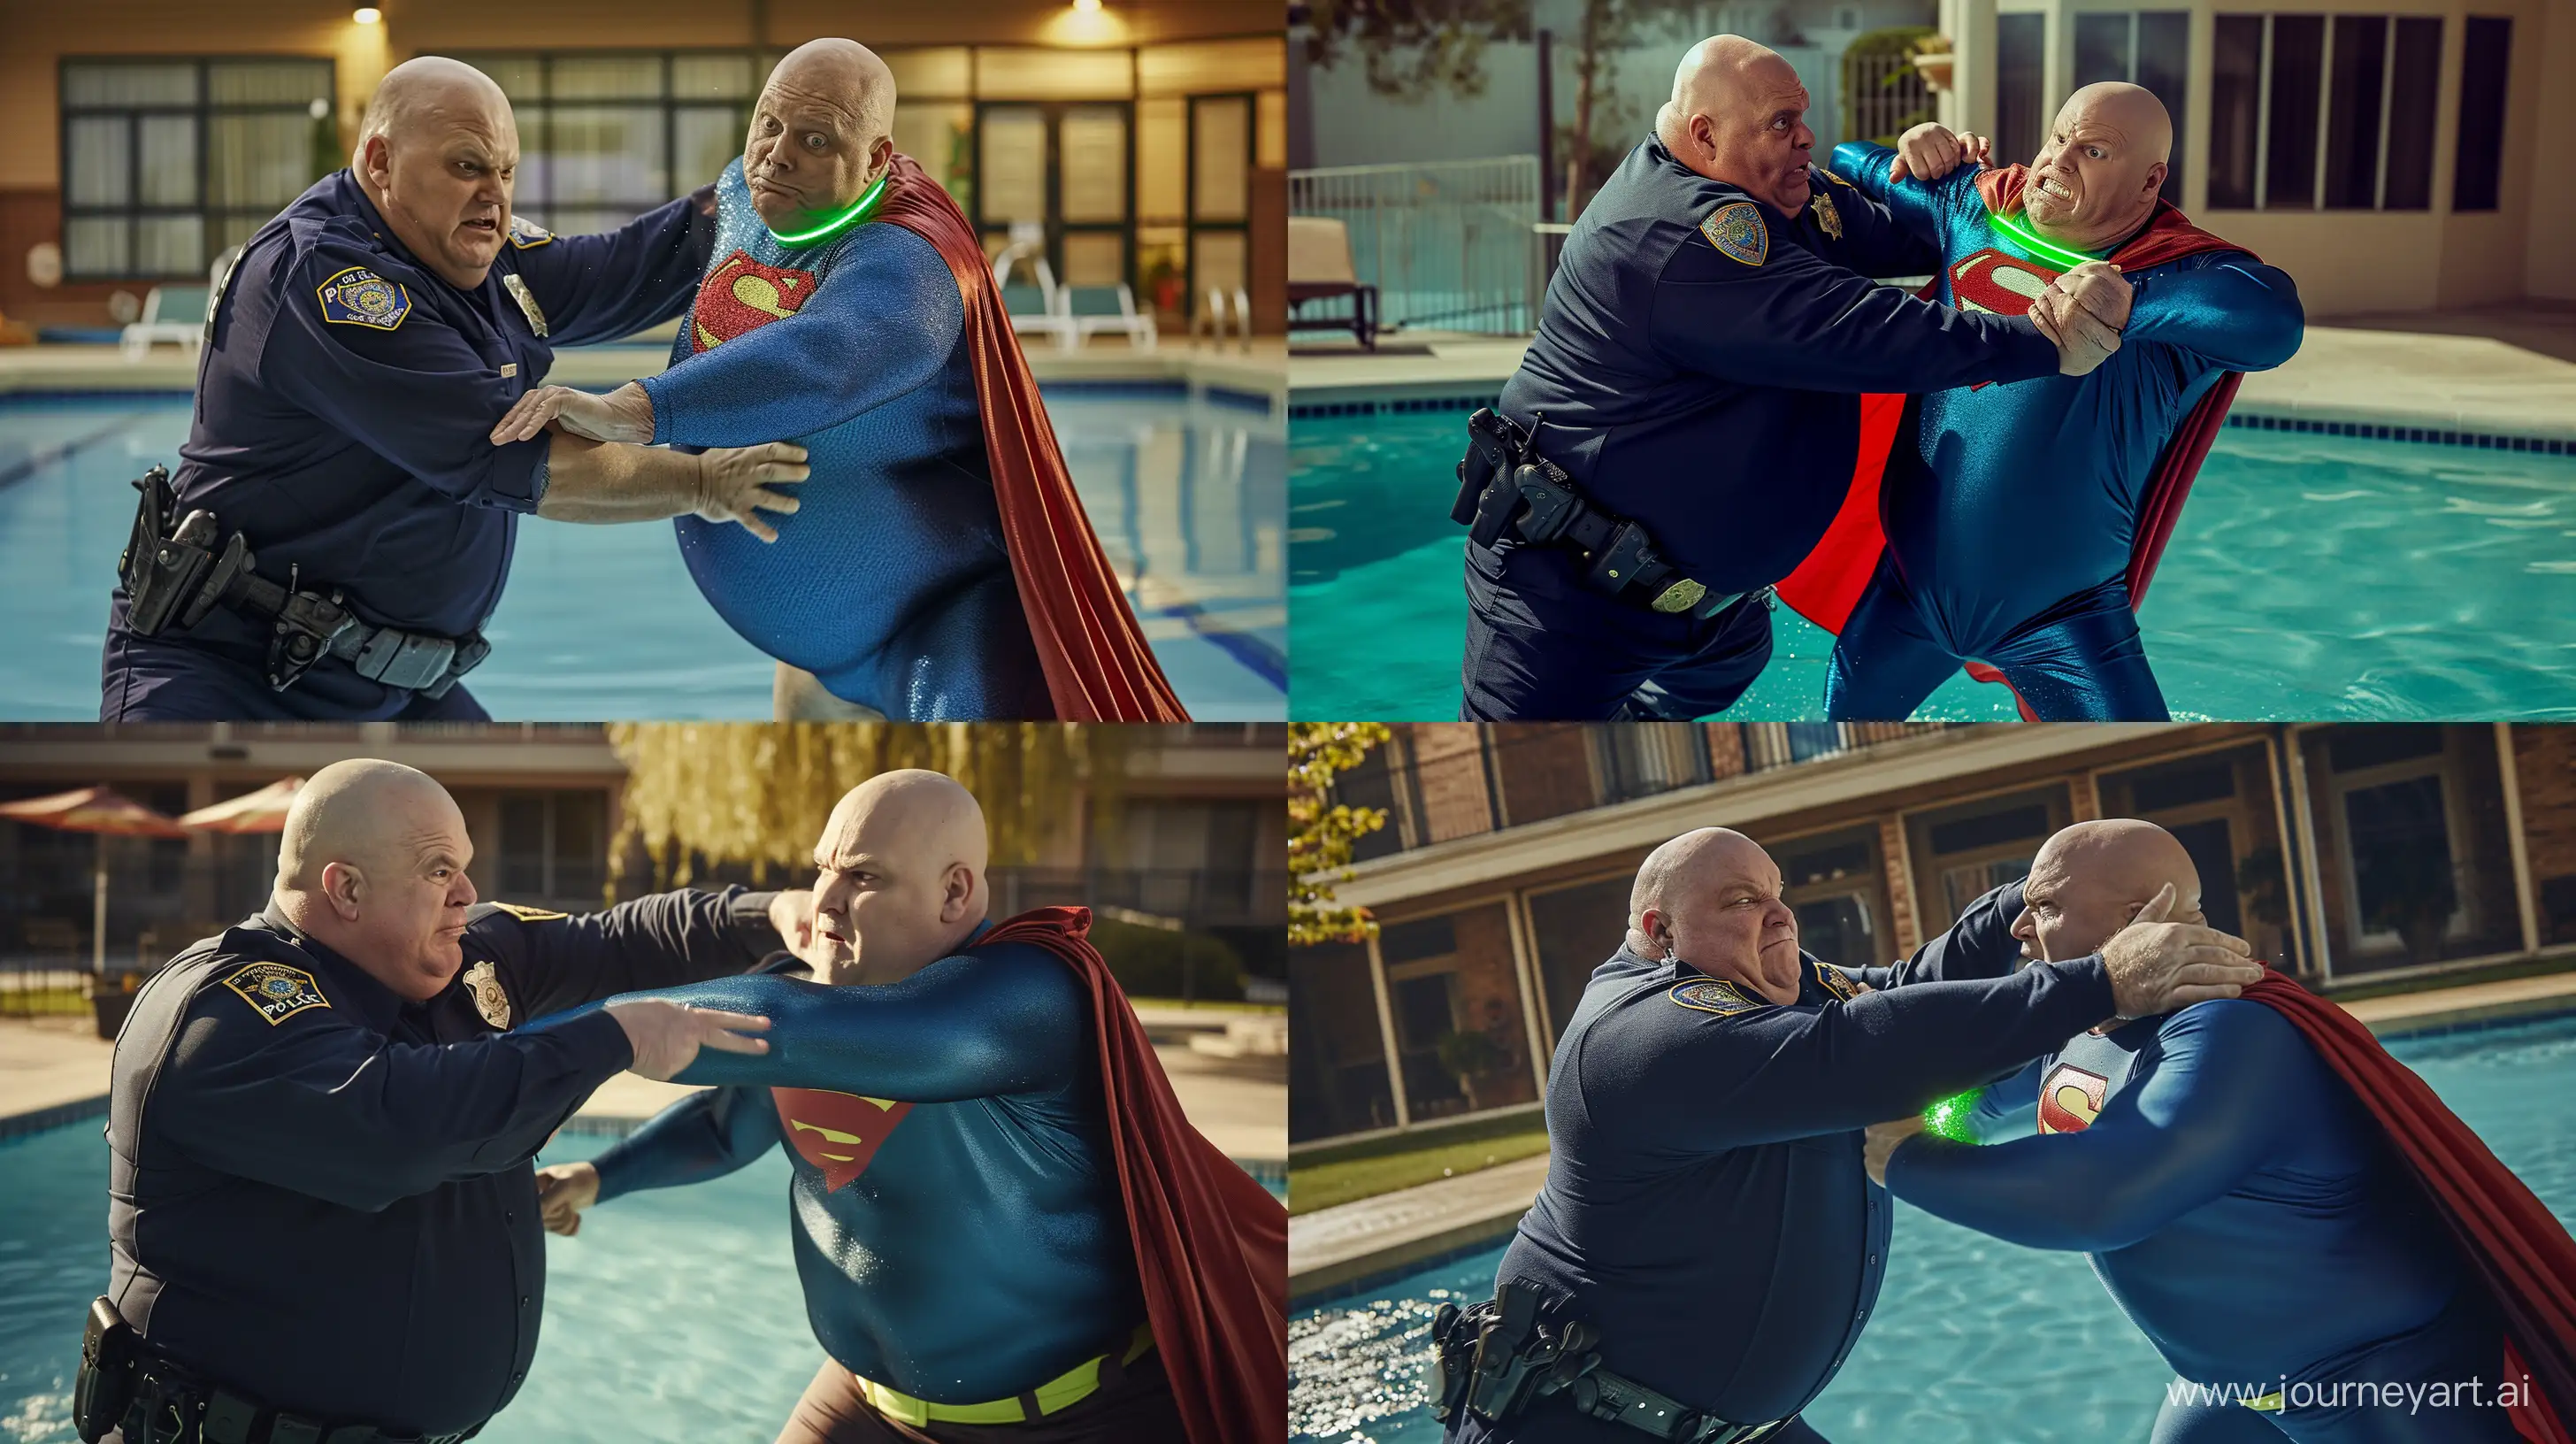 Epic-Poolside-Showdown-Navy-Policeman-vs-Silky-Superman-in-Glowing-Collar